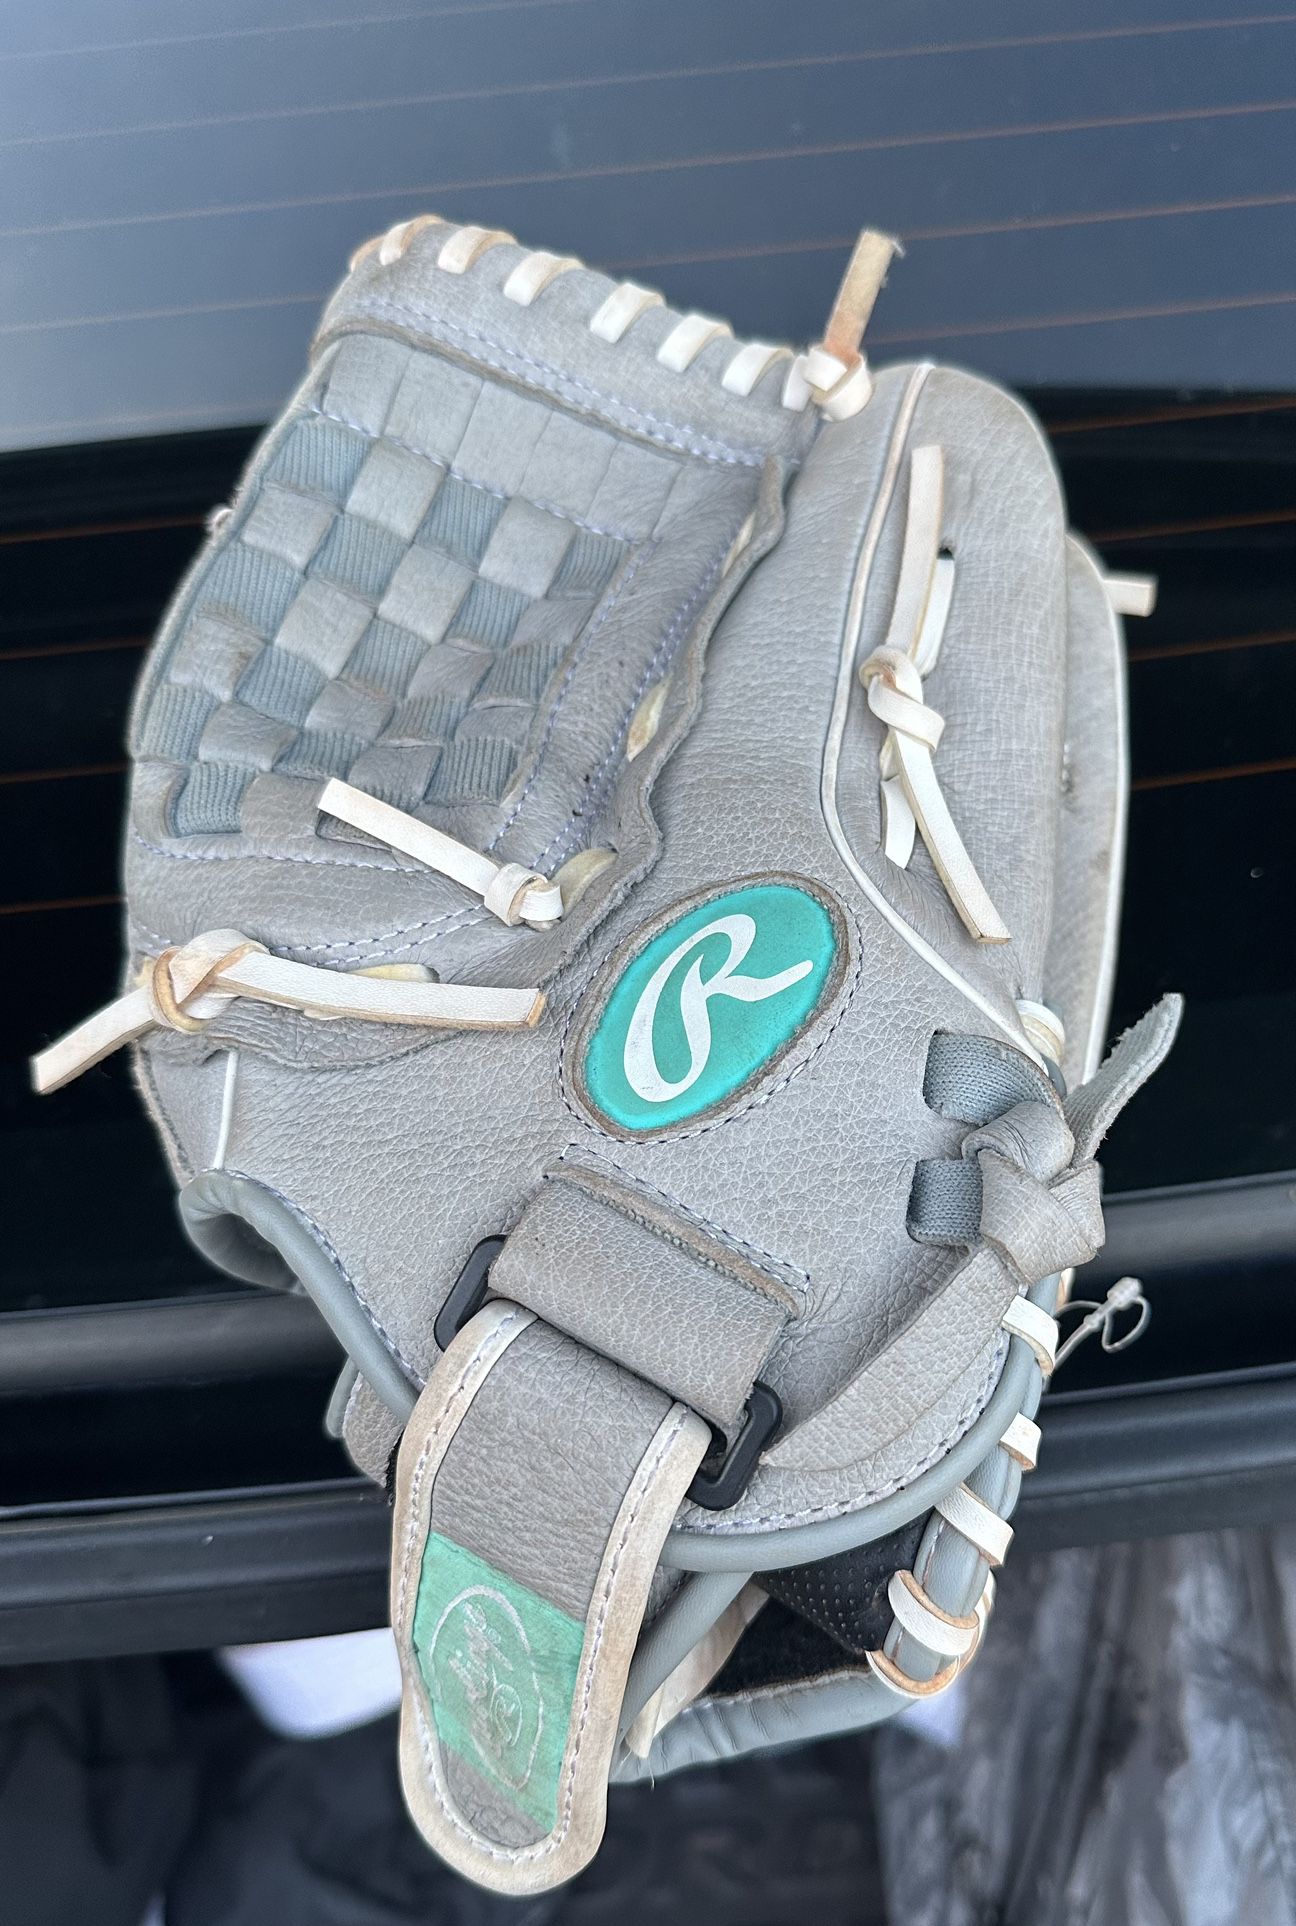 Like New Softball Glove 